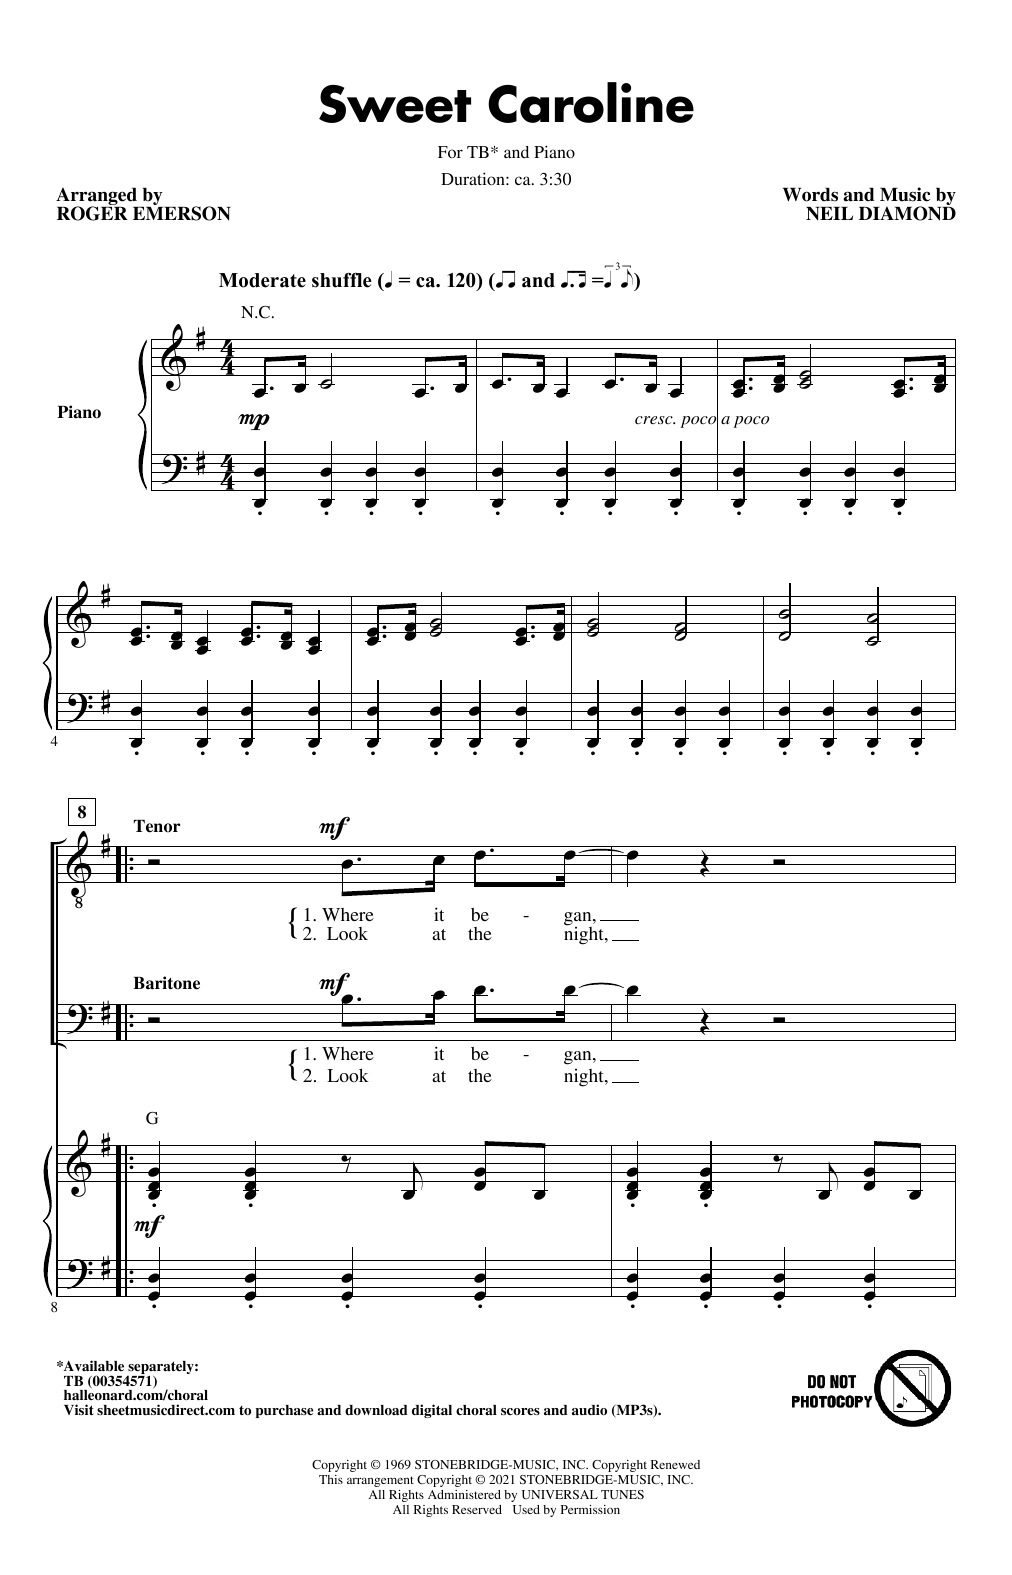 Neil Diamond Sweet Caroline (arr. Roger Emerson) sheet music notes and chords arranged for TB Choir